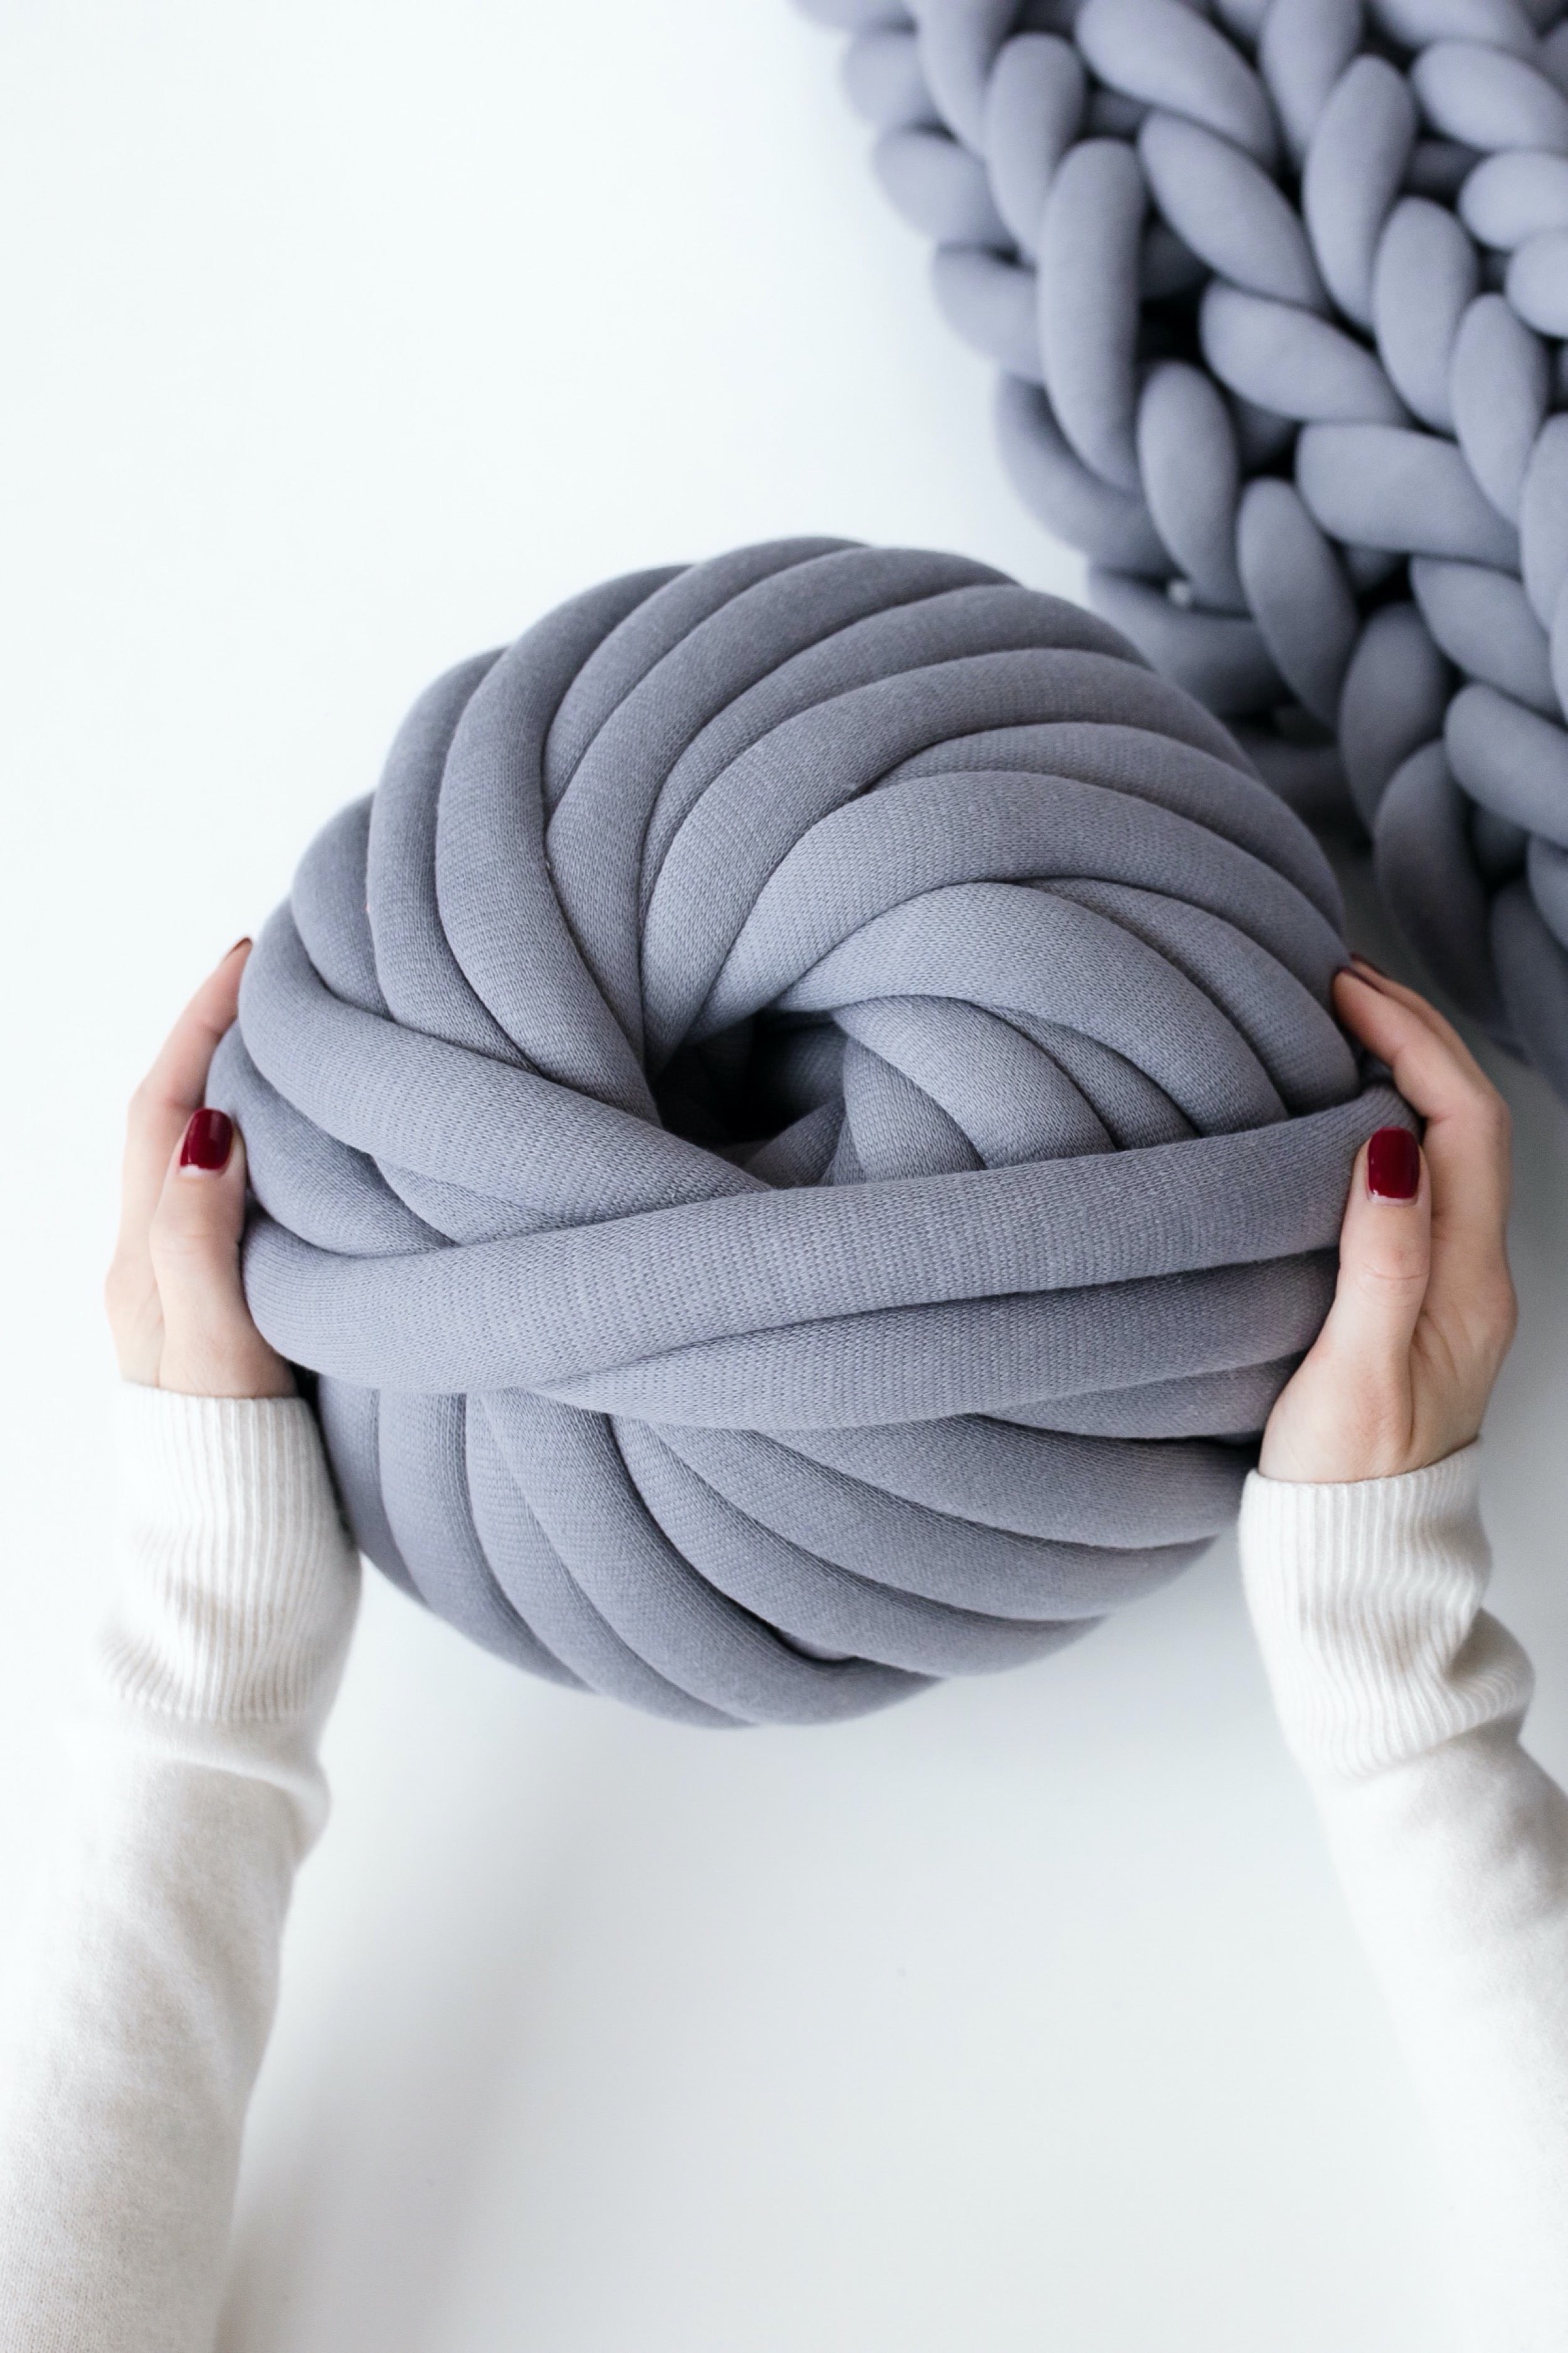 Jumbo yarn - arm knitting yarn - super chunky yarn - giant yarn